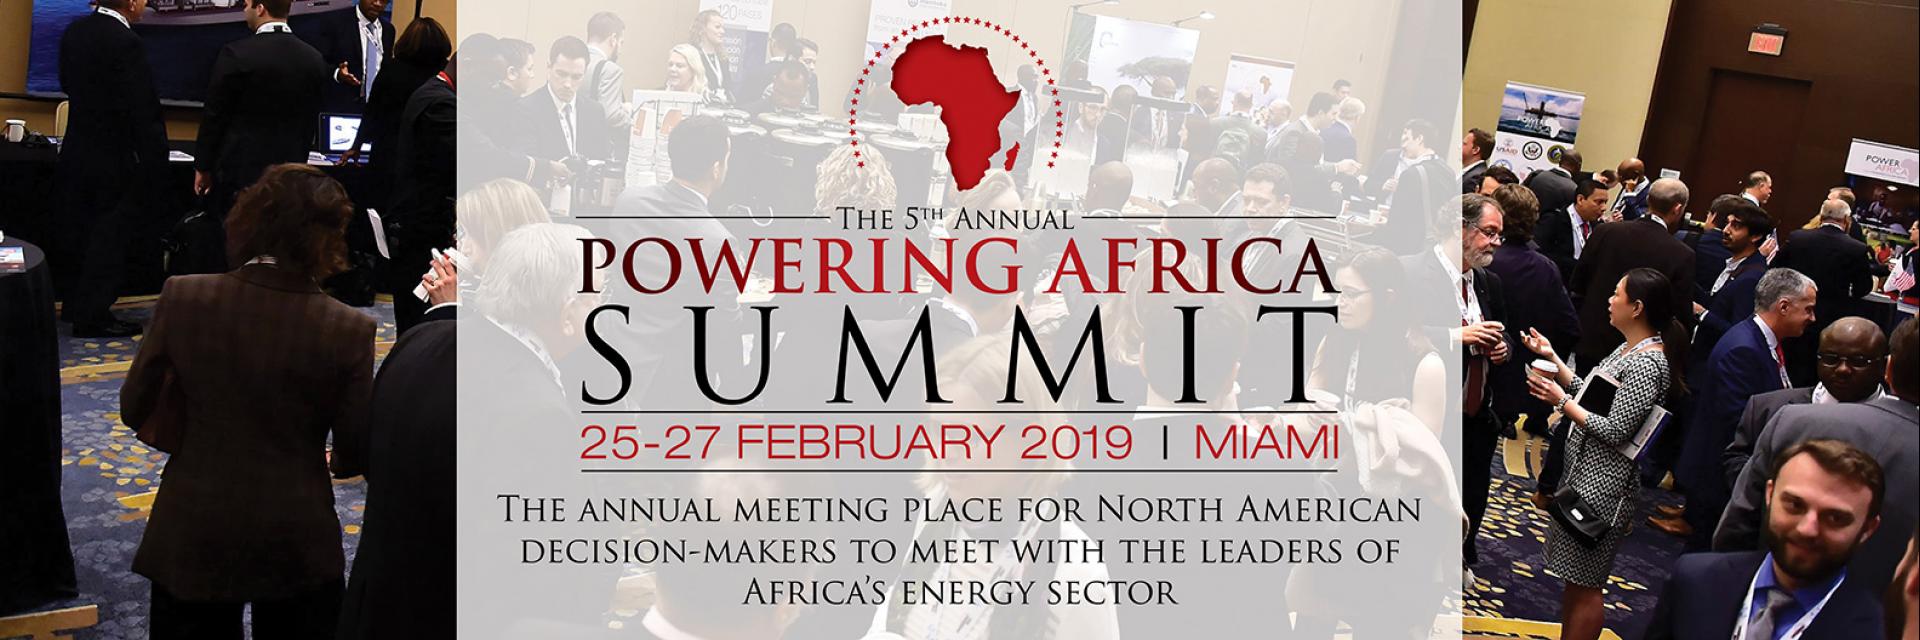 powering africa summit